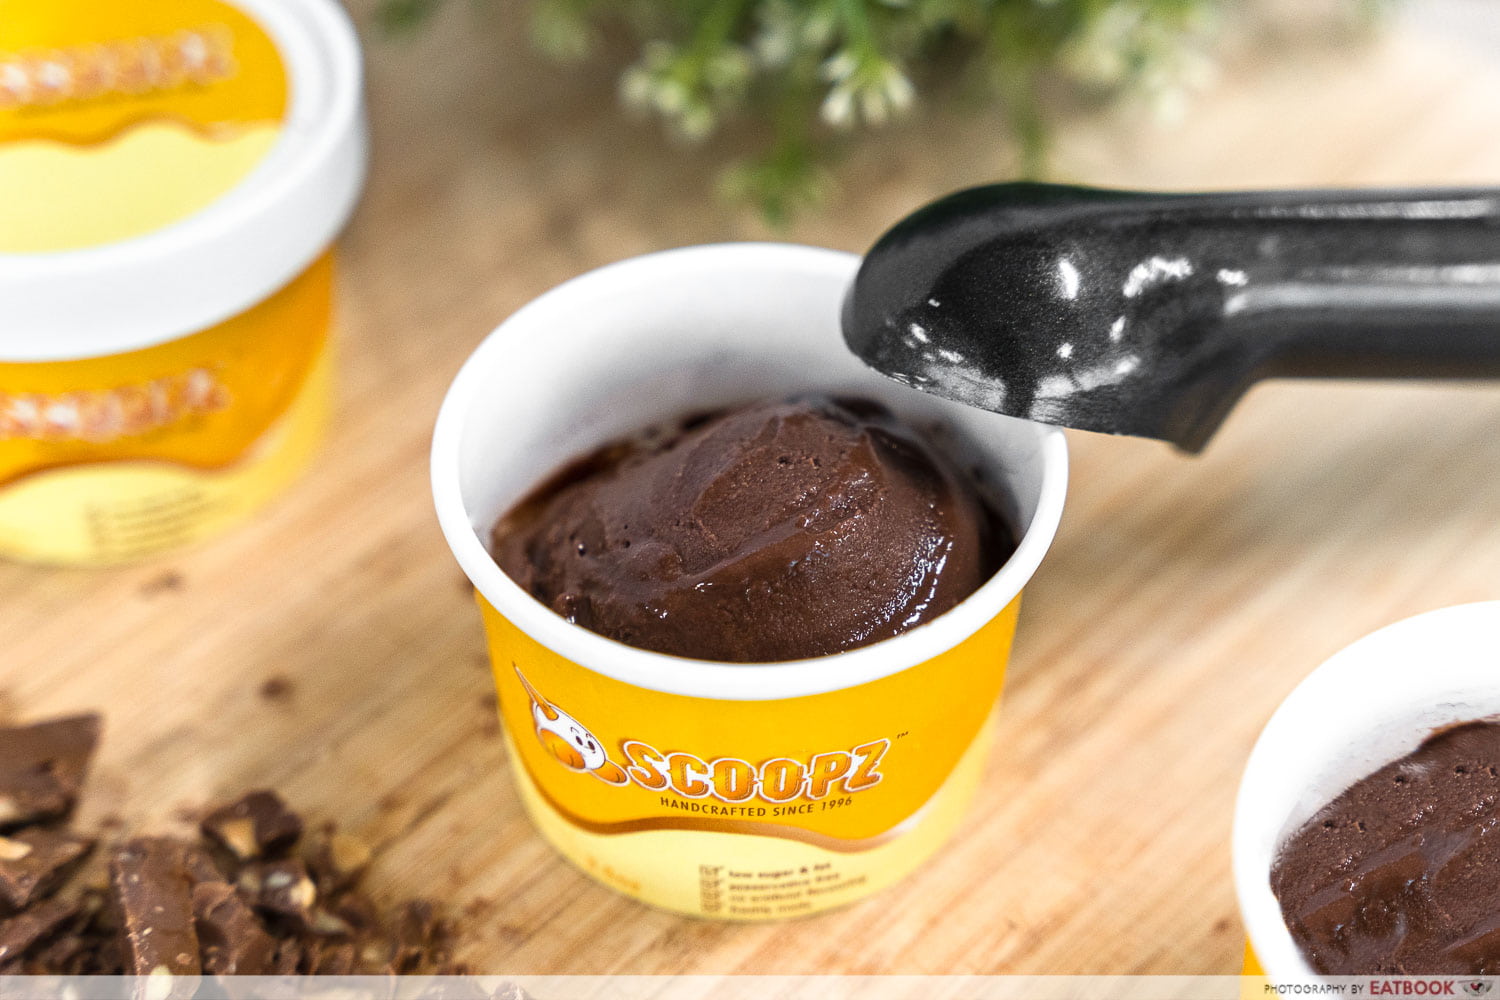 Scoopz Healthier Choice Chocolate Ice Cream